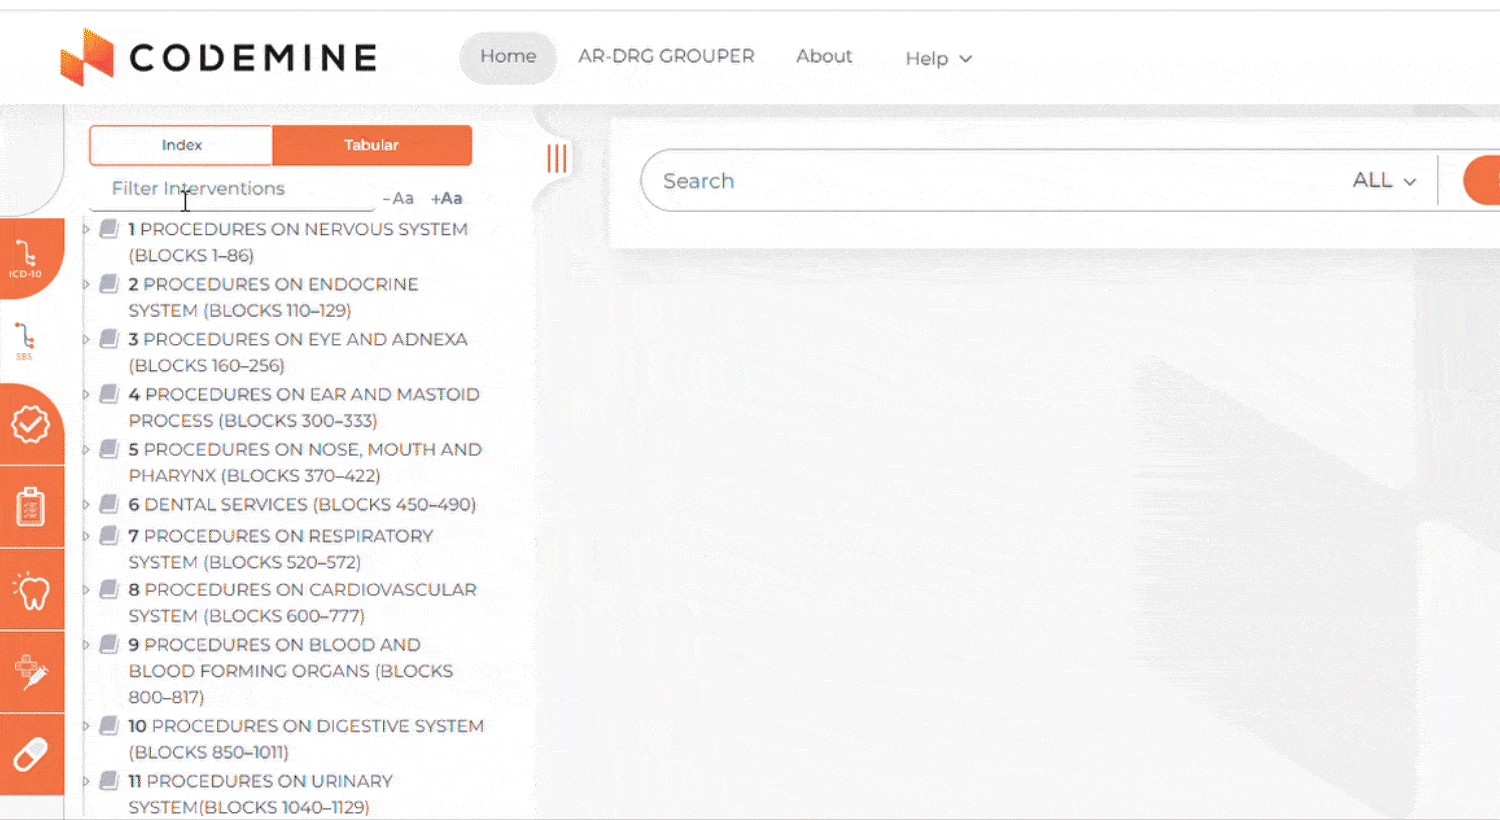 CODEMINE Demo screen showing Advanced search capabilities